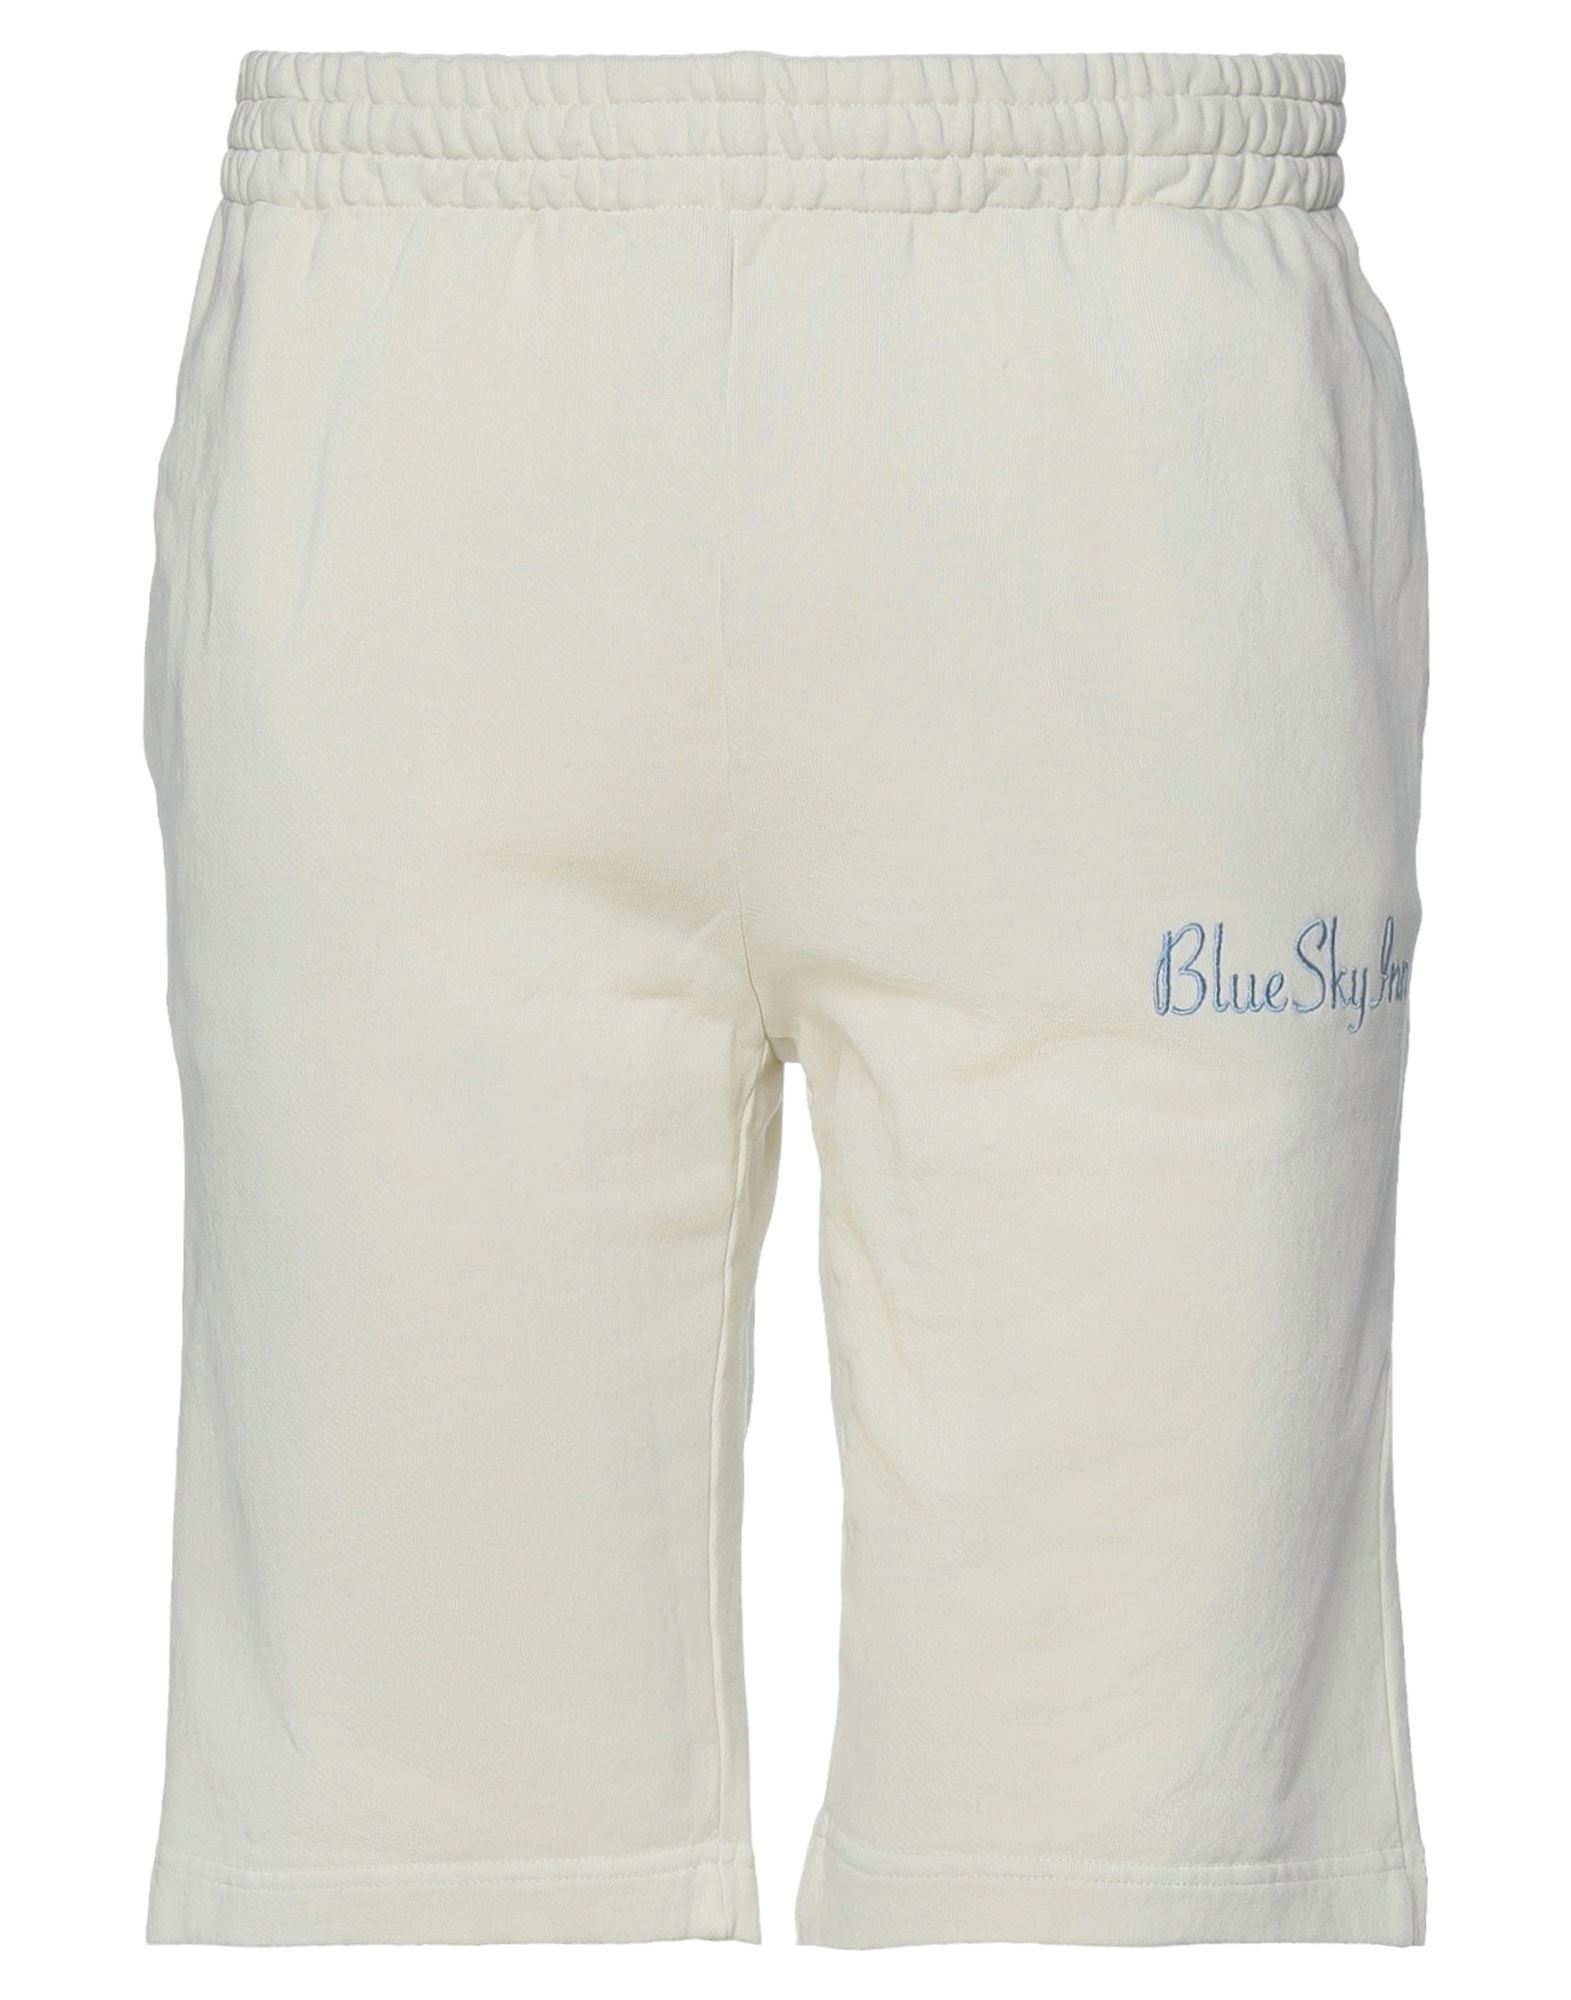 BLUE SKY INN Shorts & Bermudashorts Herren Beige von BLUE SKY INN